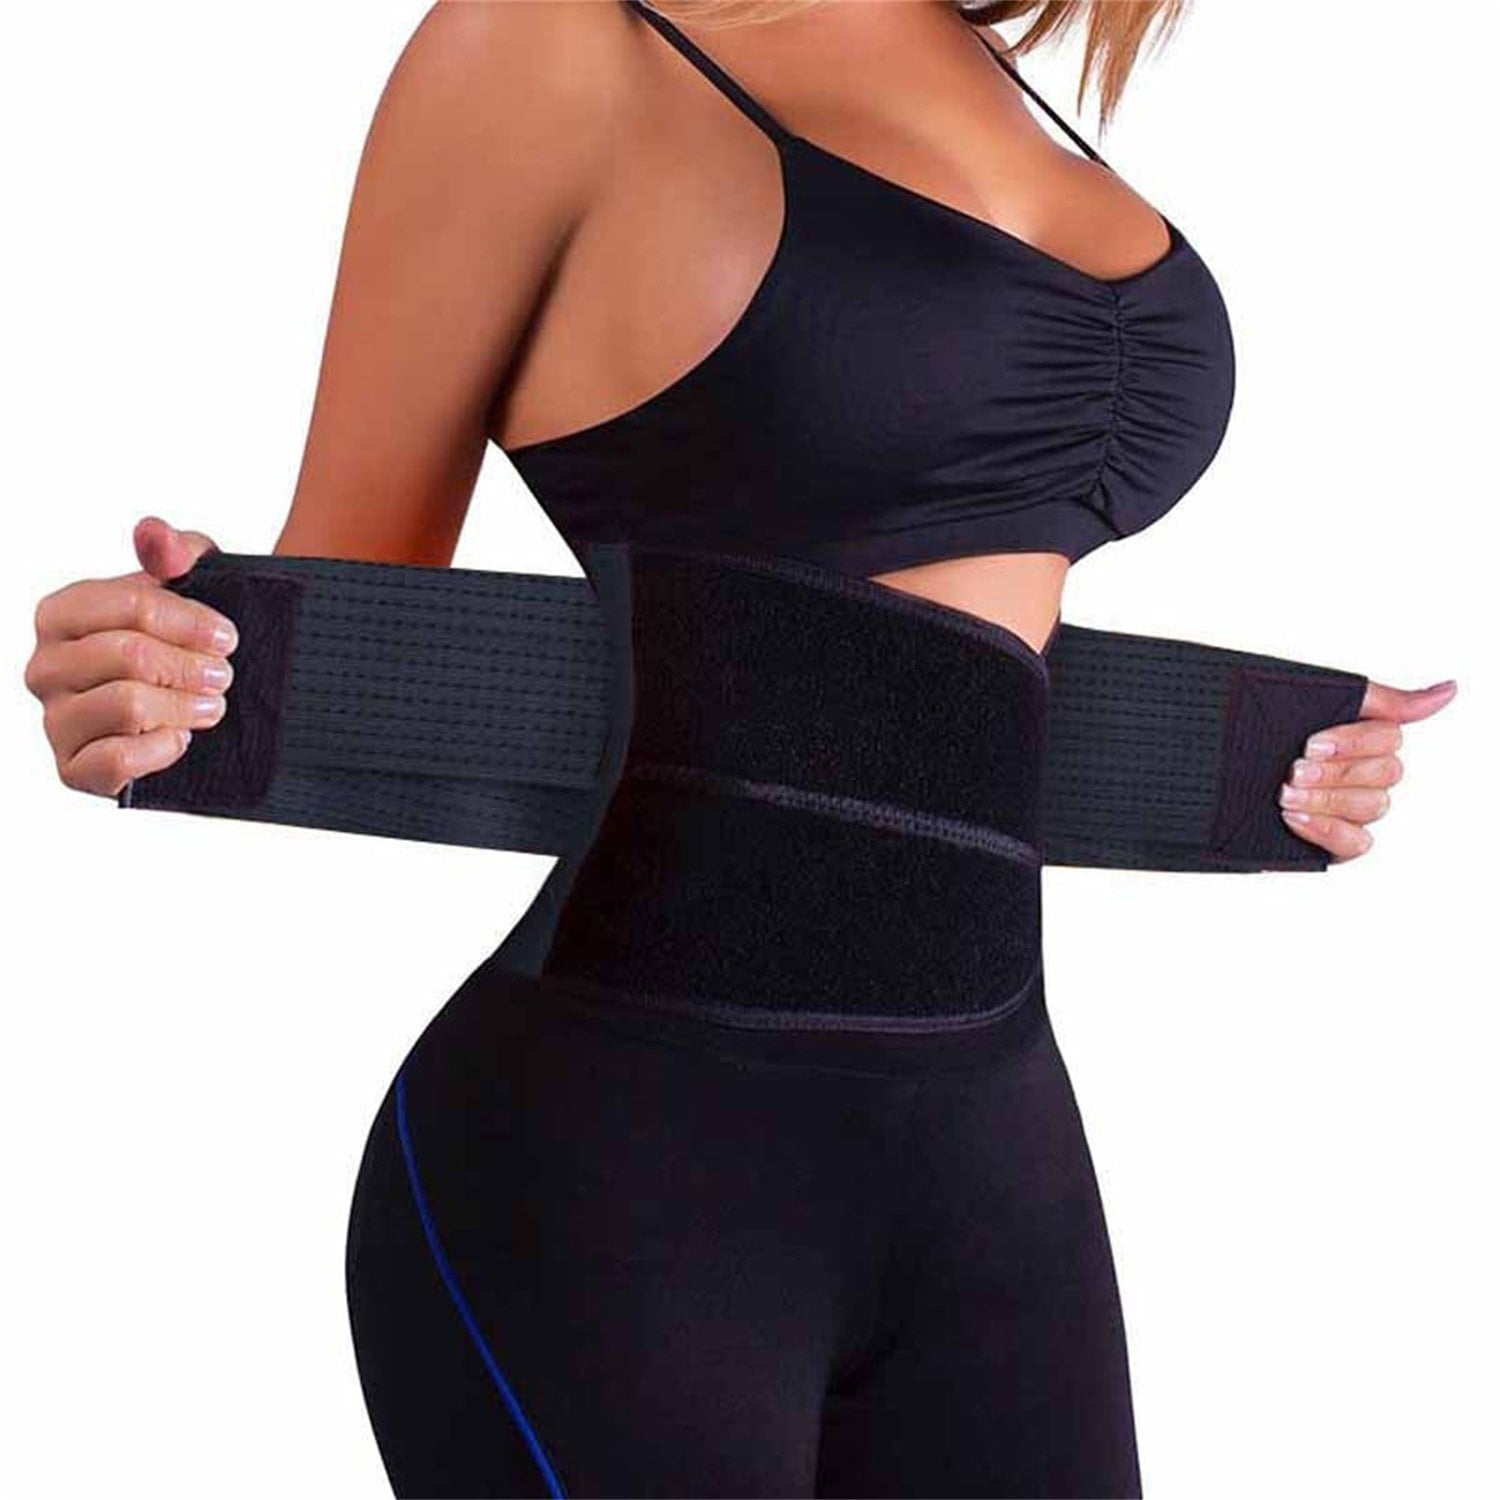 XL Waist Trainer Belt for Women Slimming Body Shaper Hot Sweat Sports Girdles Workout Belt Body Shaper 6Sizes 